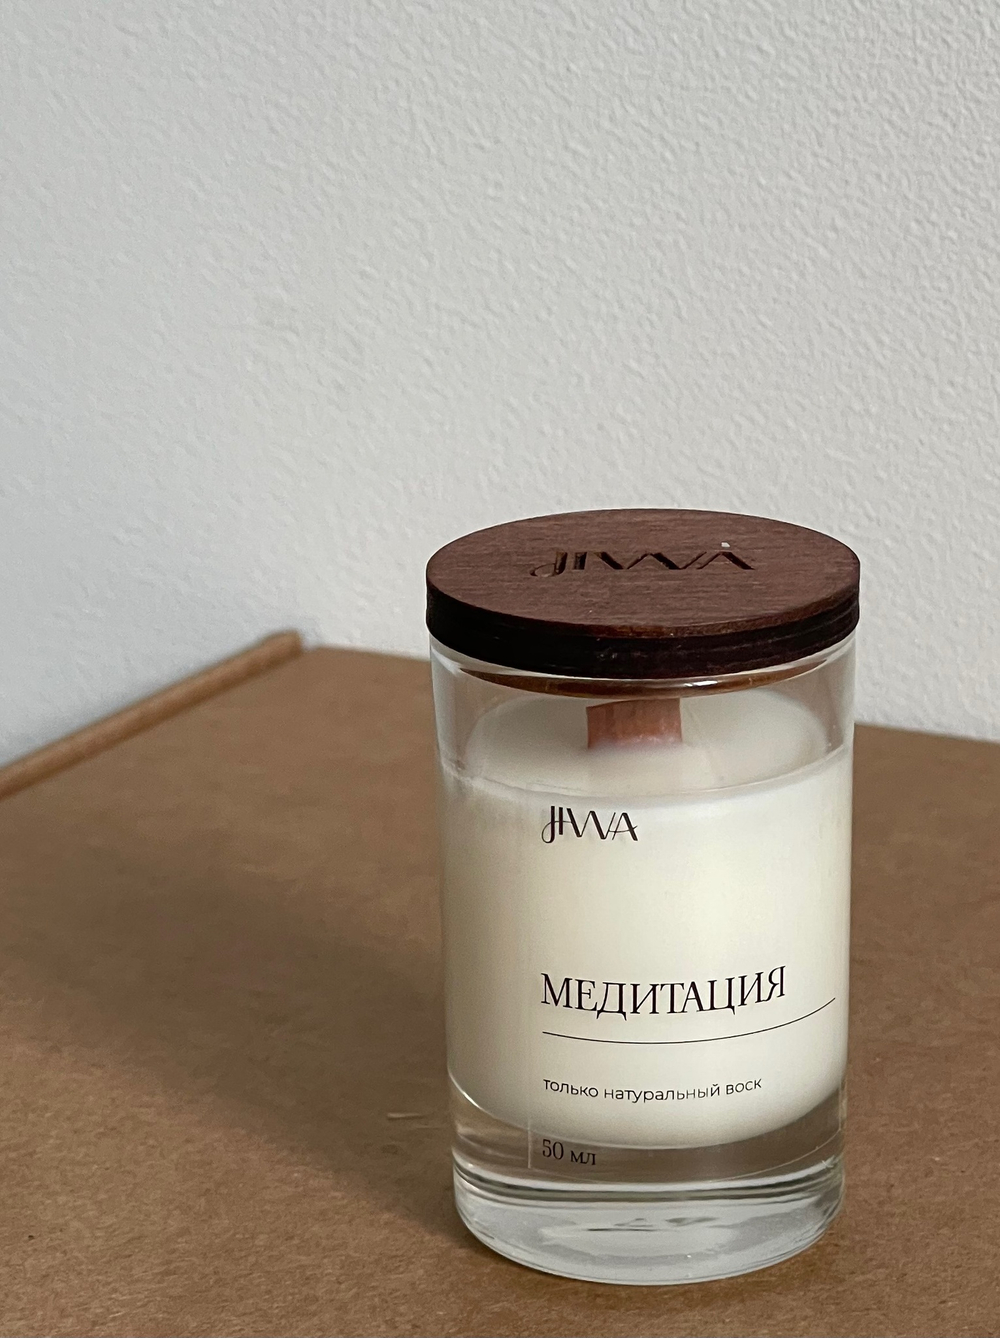 Свеча натуральная ароматическая JIWA 50 мл - Медитация